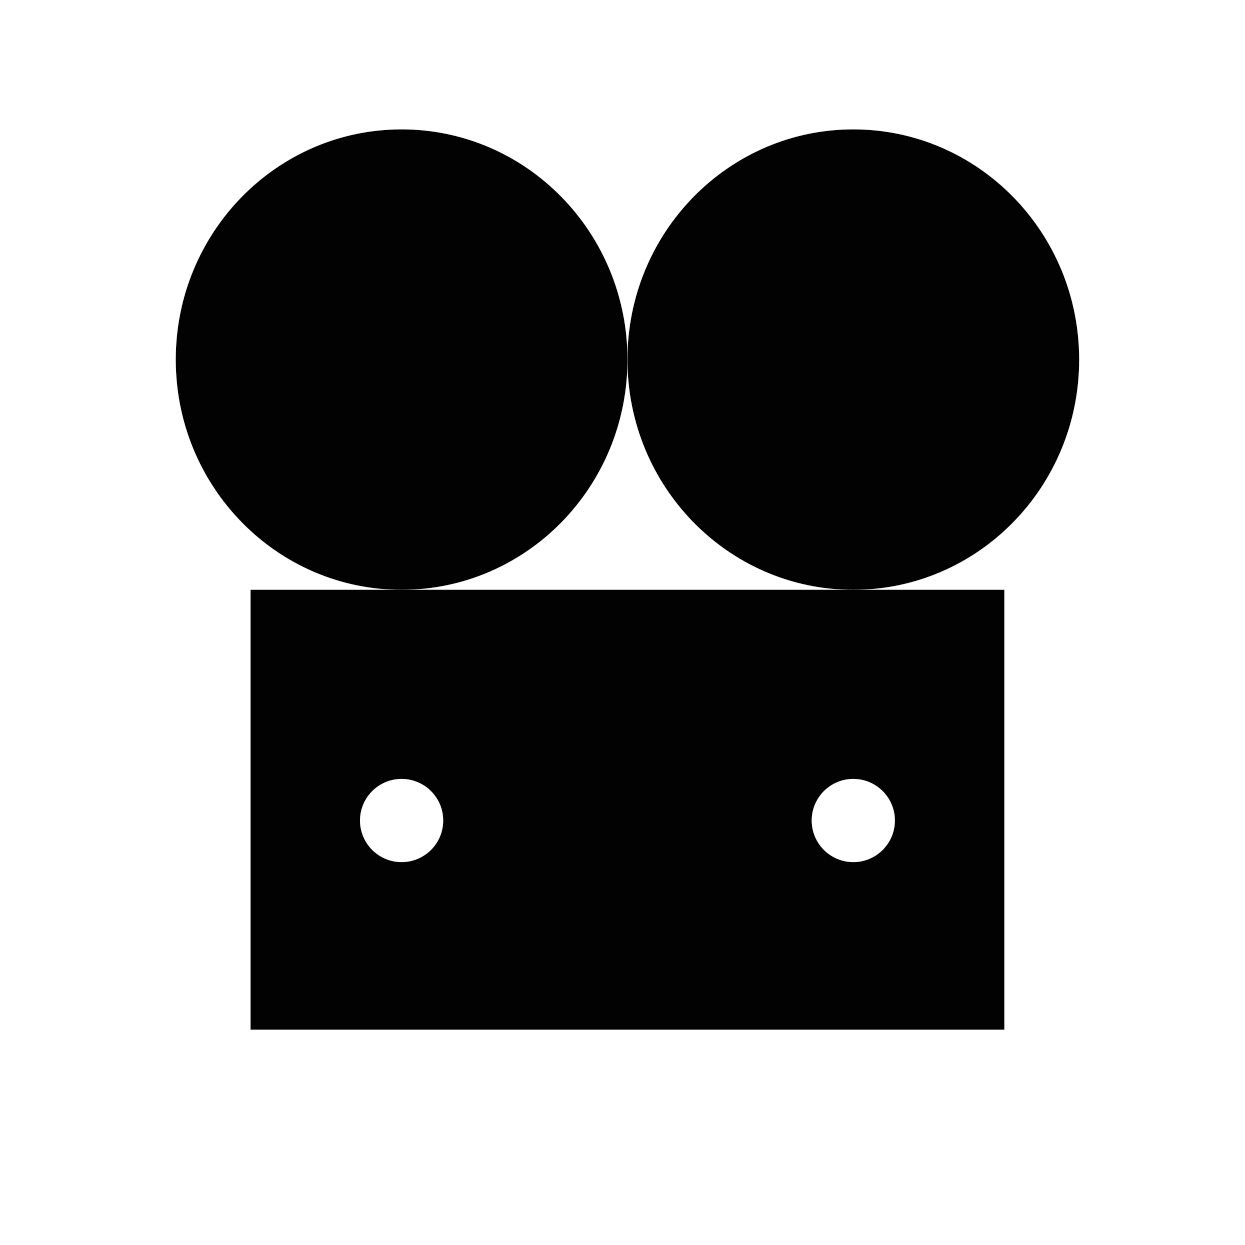 ATHICFF - Παιδικό και Εφηβικό Διεθνές Φεστιβάλ Κινηματογράφου Αθήνας logo